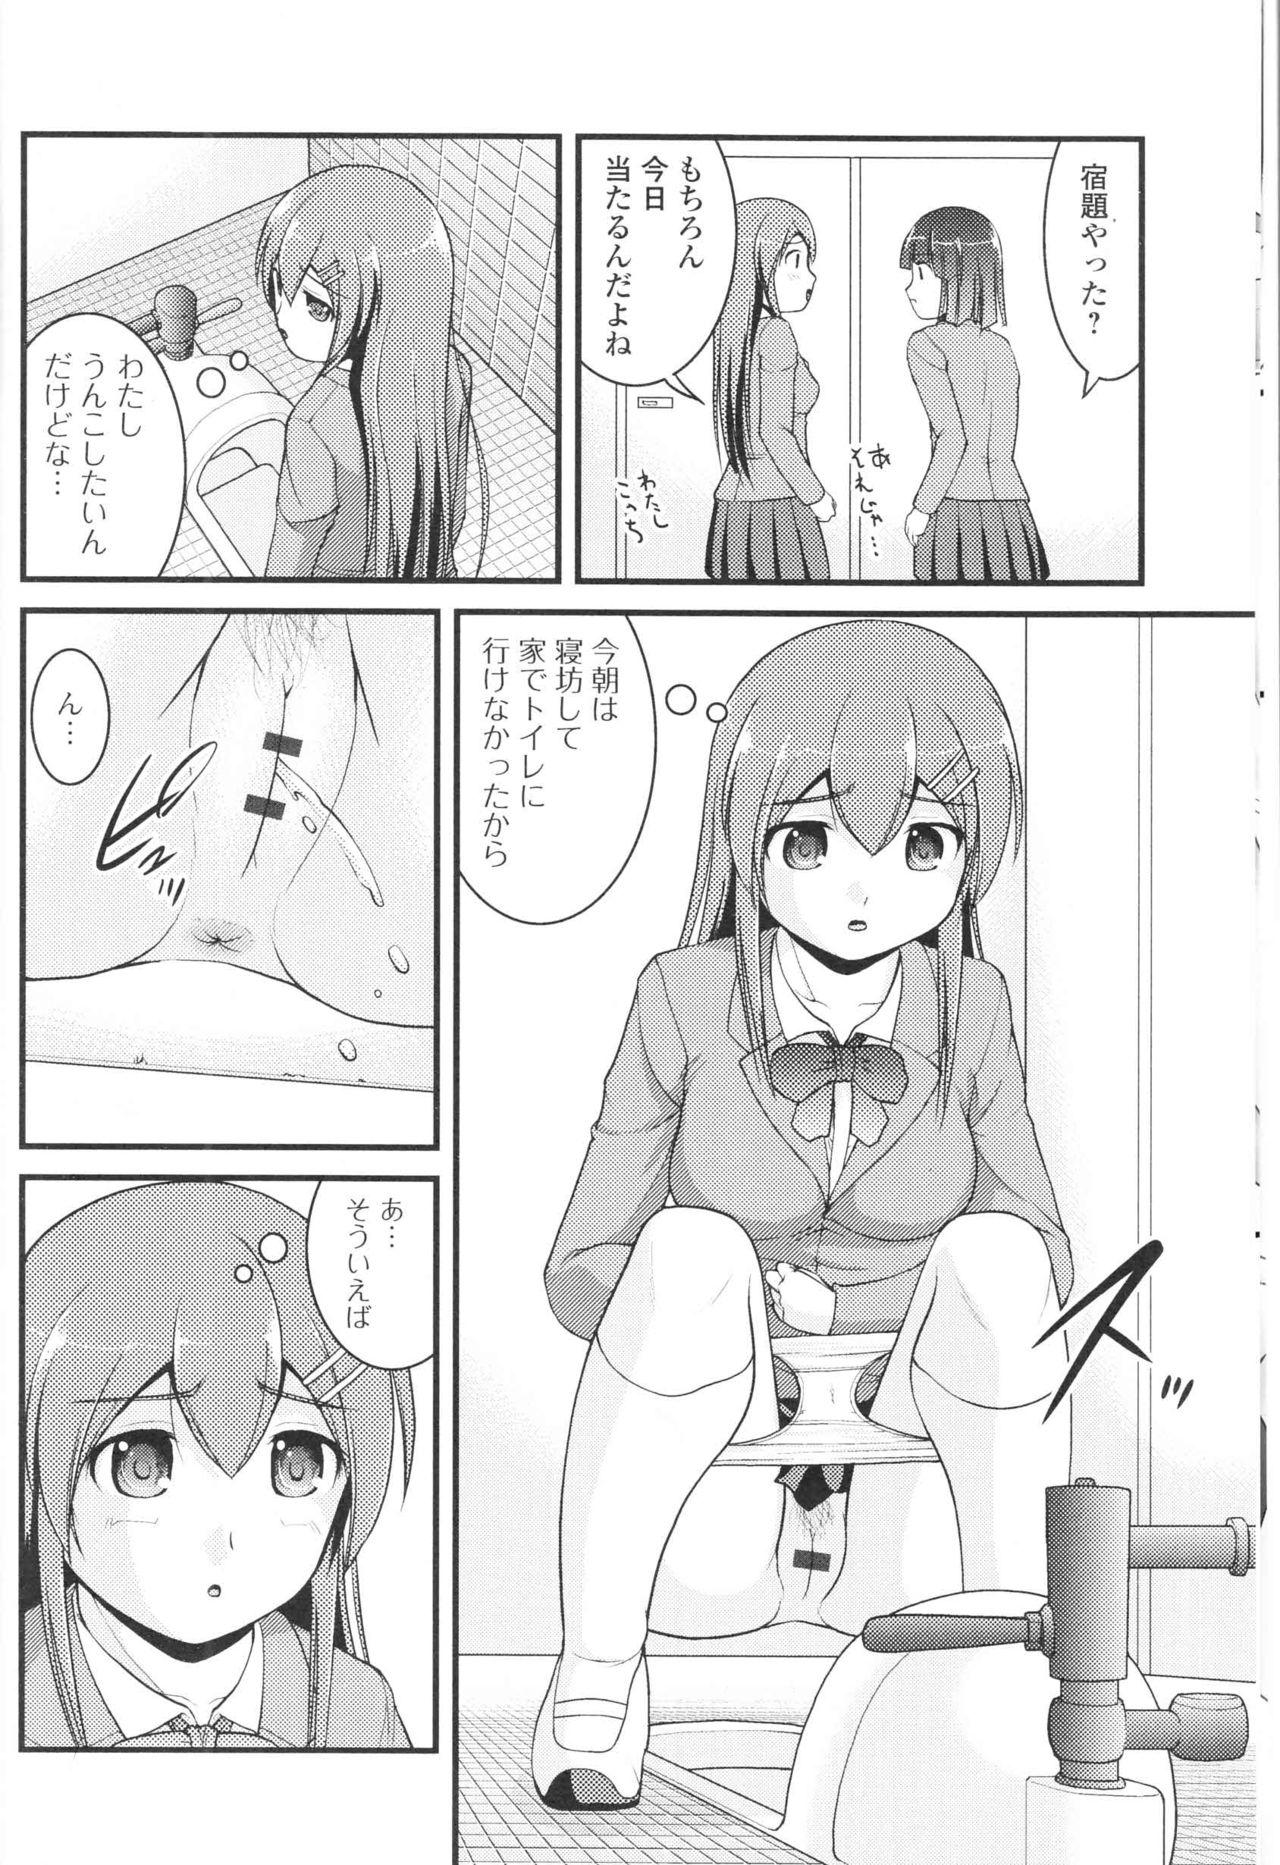 Long Nozoite wa Ikenai NEO! III - Do Not Peep NEO! III Topless - Page 8